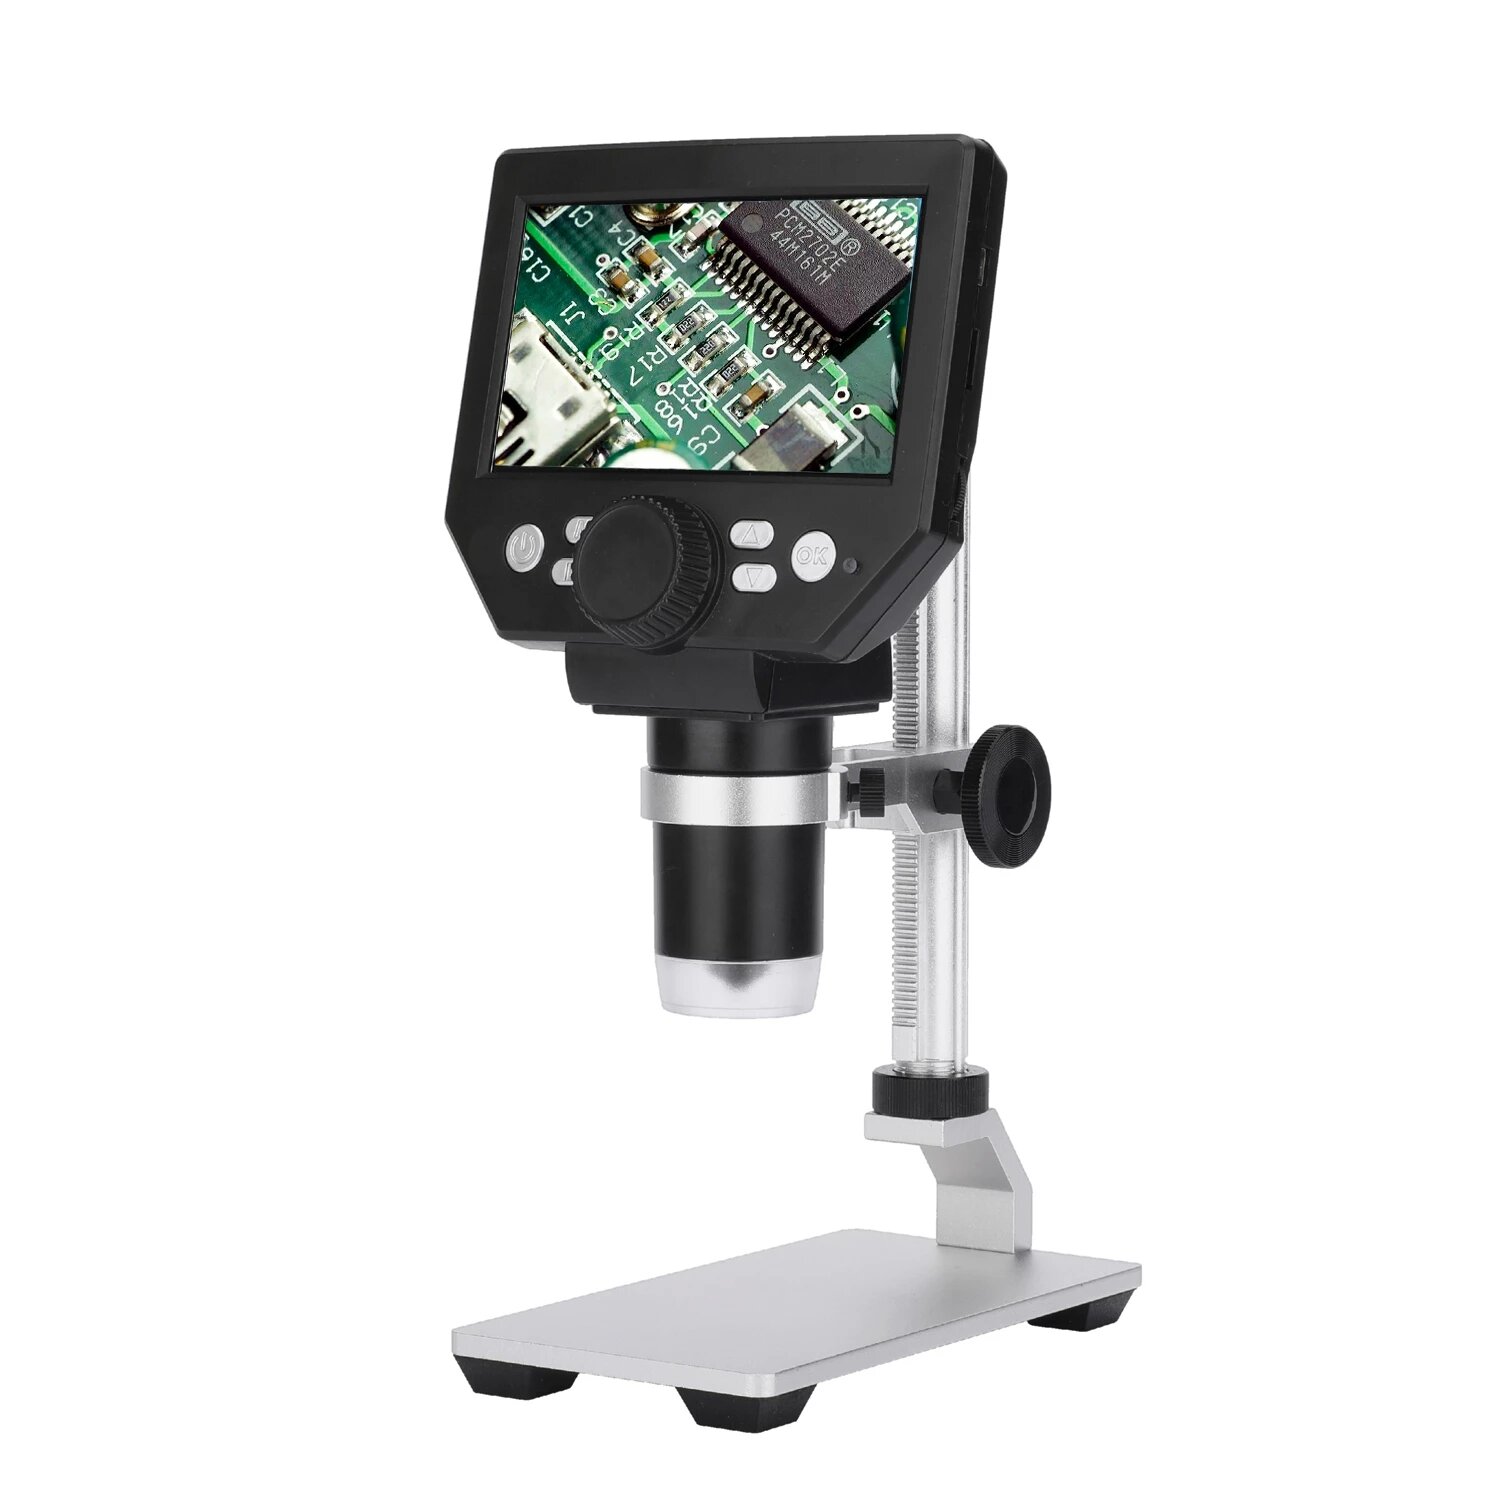 Картинка для MUSTOOL G1000 Portable 1-1000X HD 8MP Цифровой микроскоп 4,3 дюйма Электронный HD Видеомикроскопы Бороскоп Лупа камера М